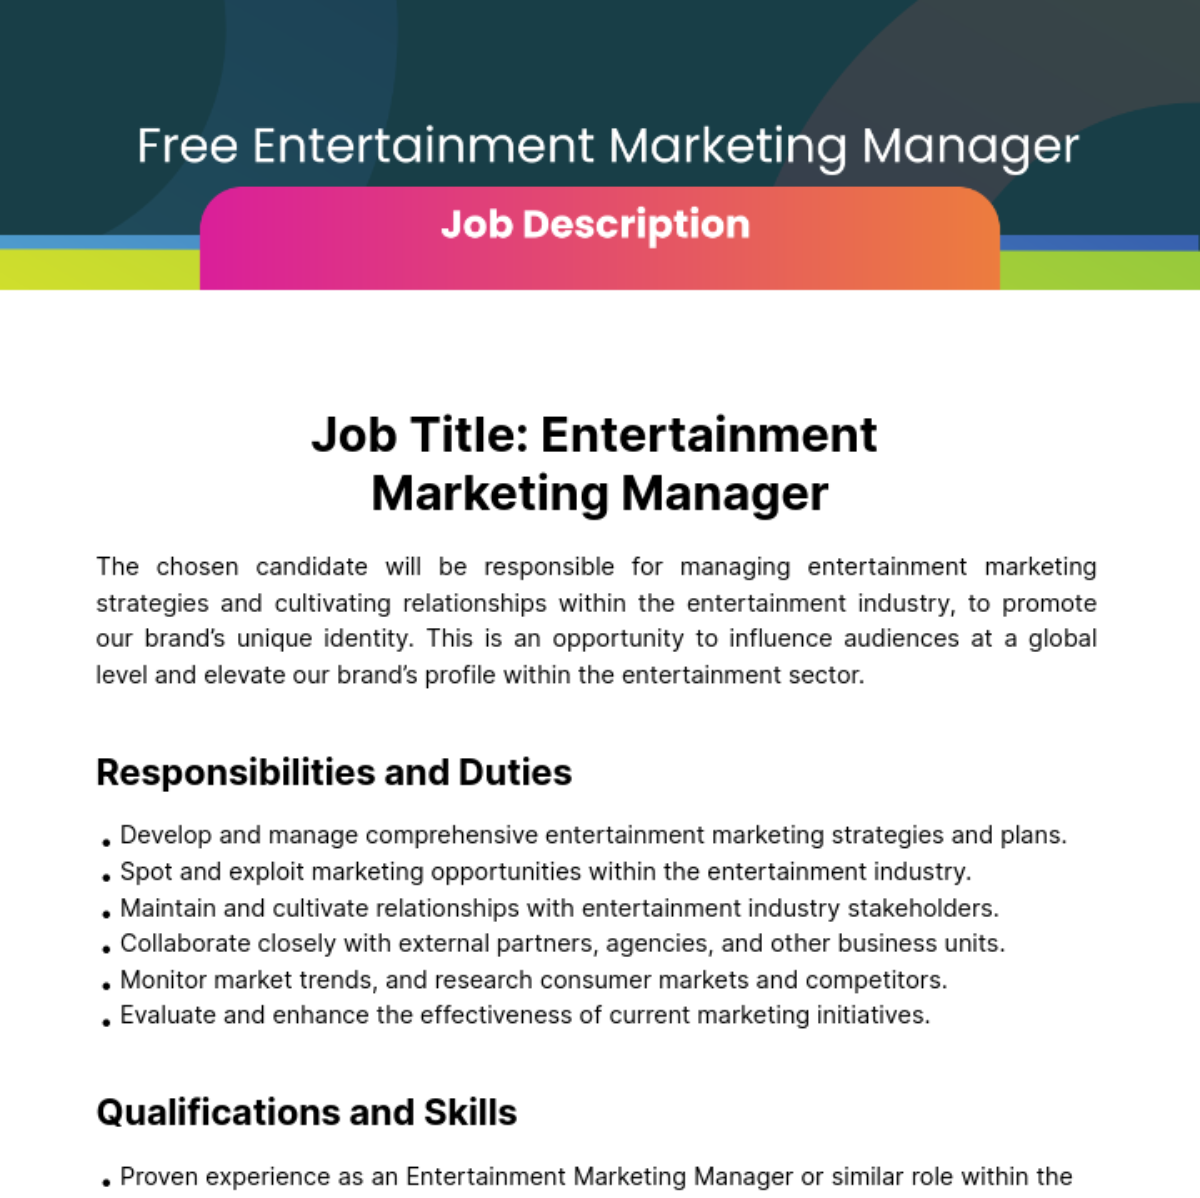 Free Entertainment Marketing Manager Job Description Template